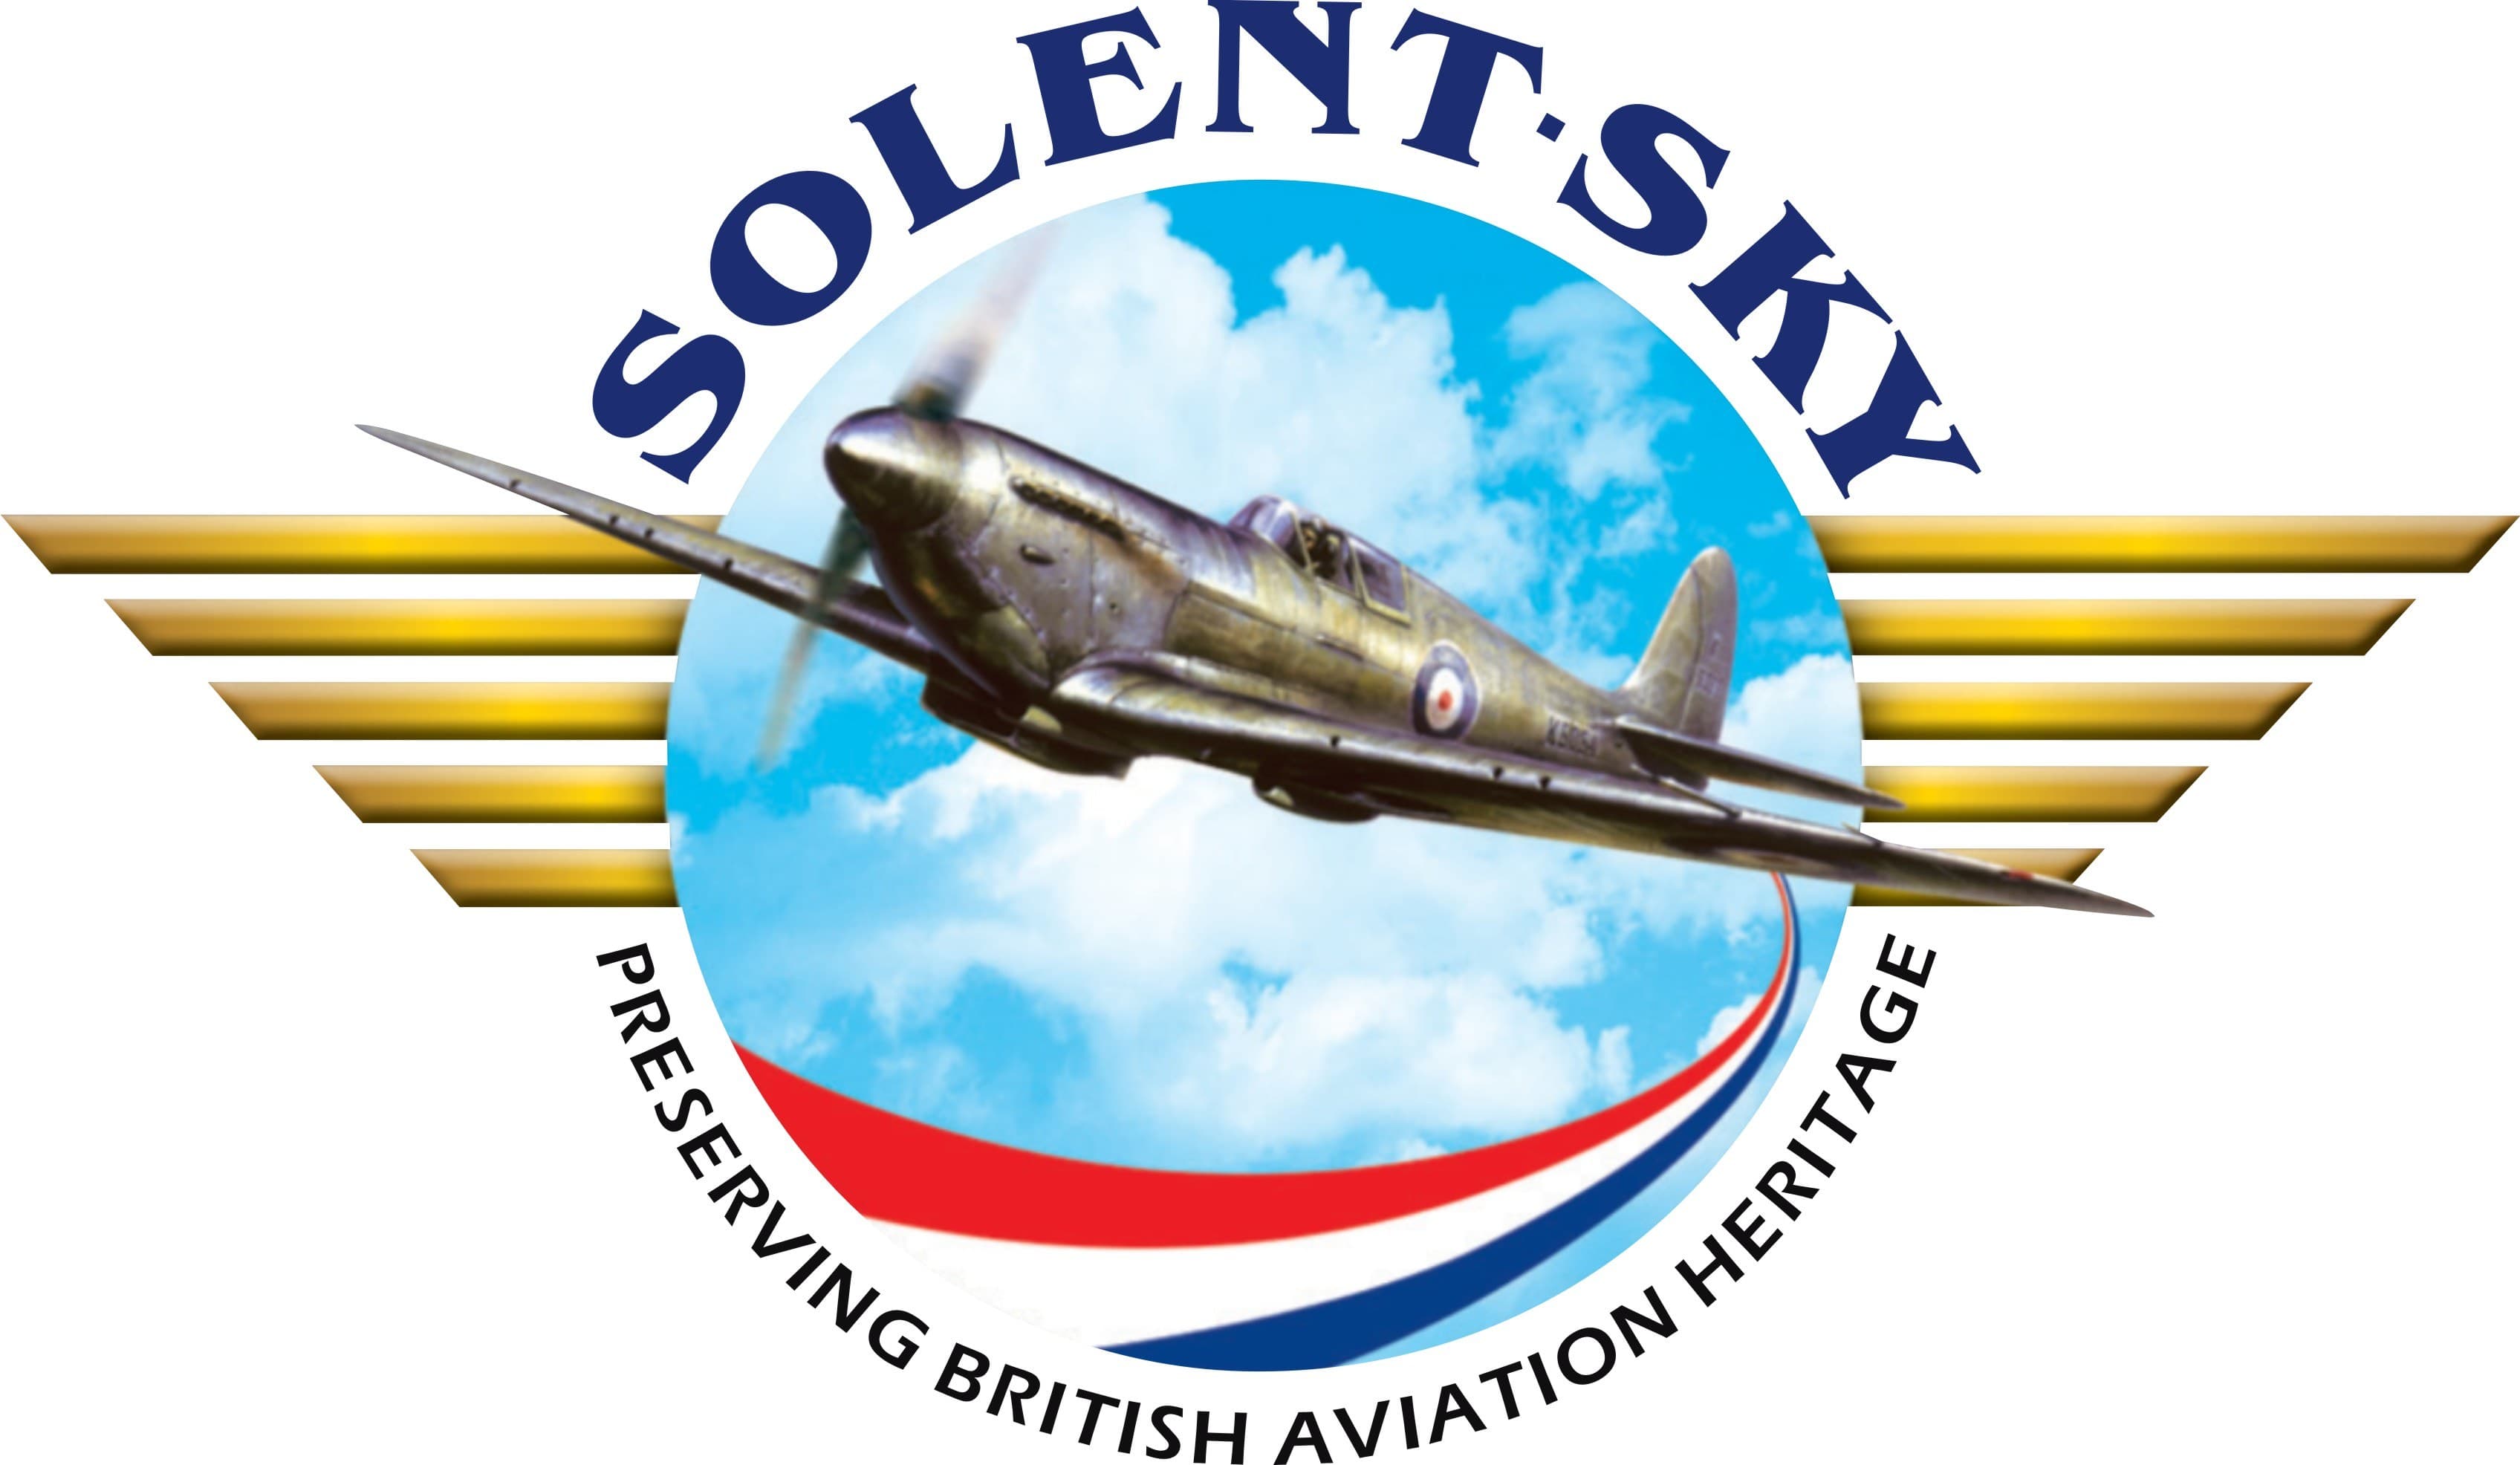 Solent-sky-logo